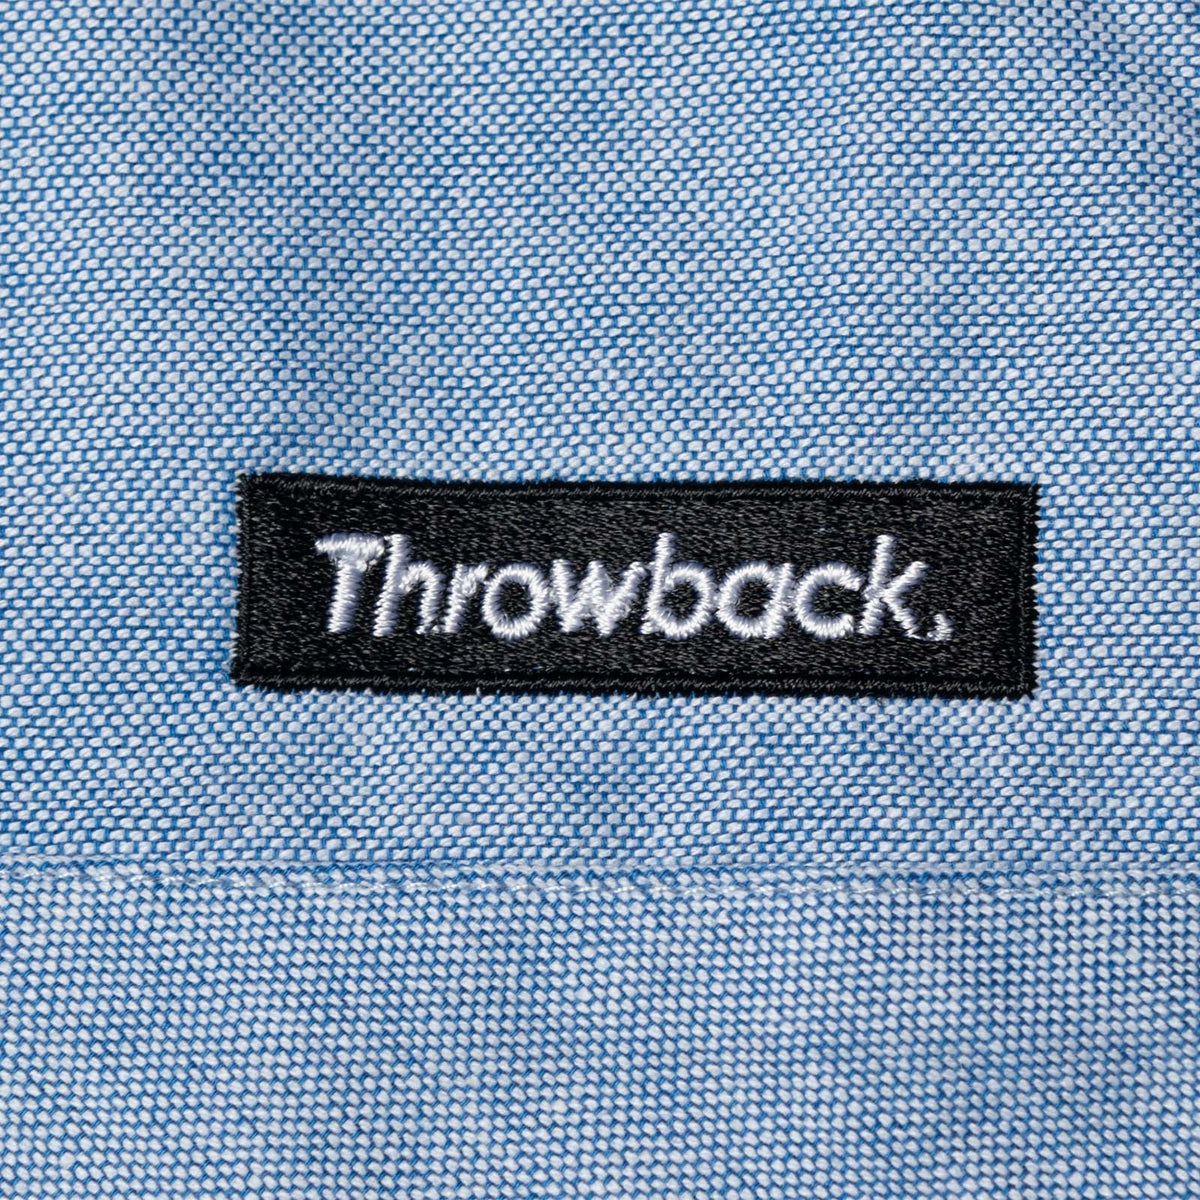 Throwback Icon Oxford Shirt - Light Blue